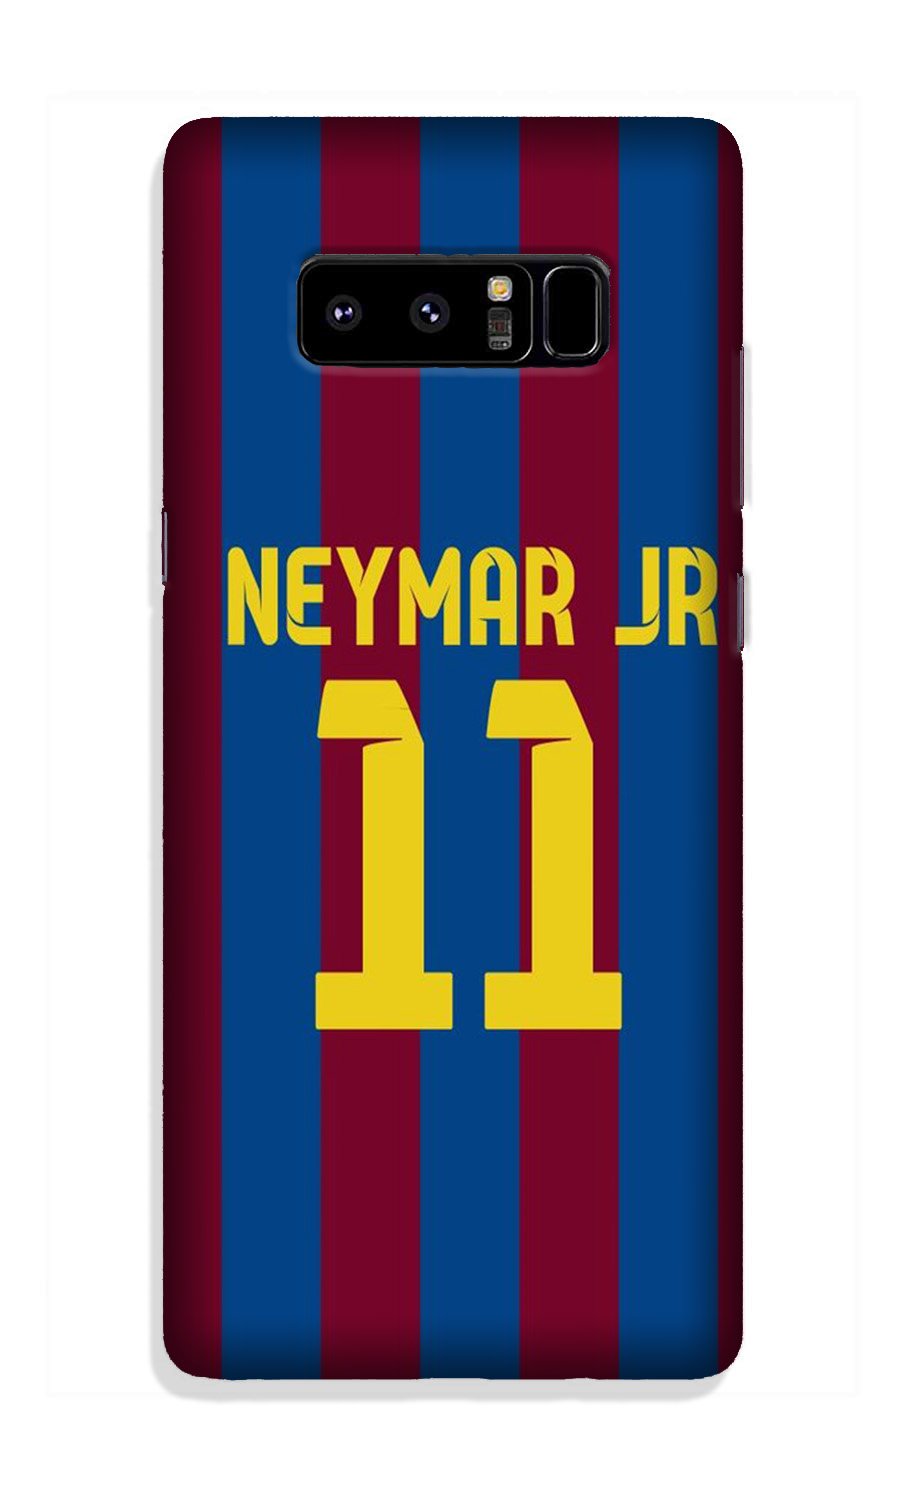 Neymar Jr Case for Galaxy Note 8(Design - 162)